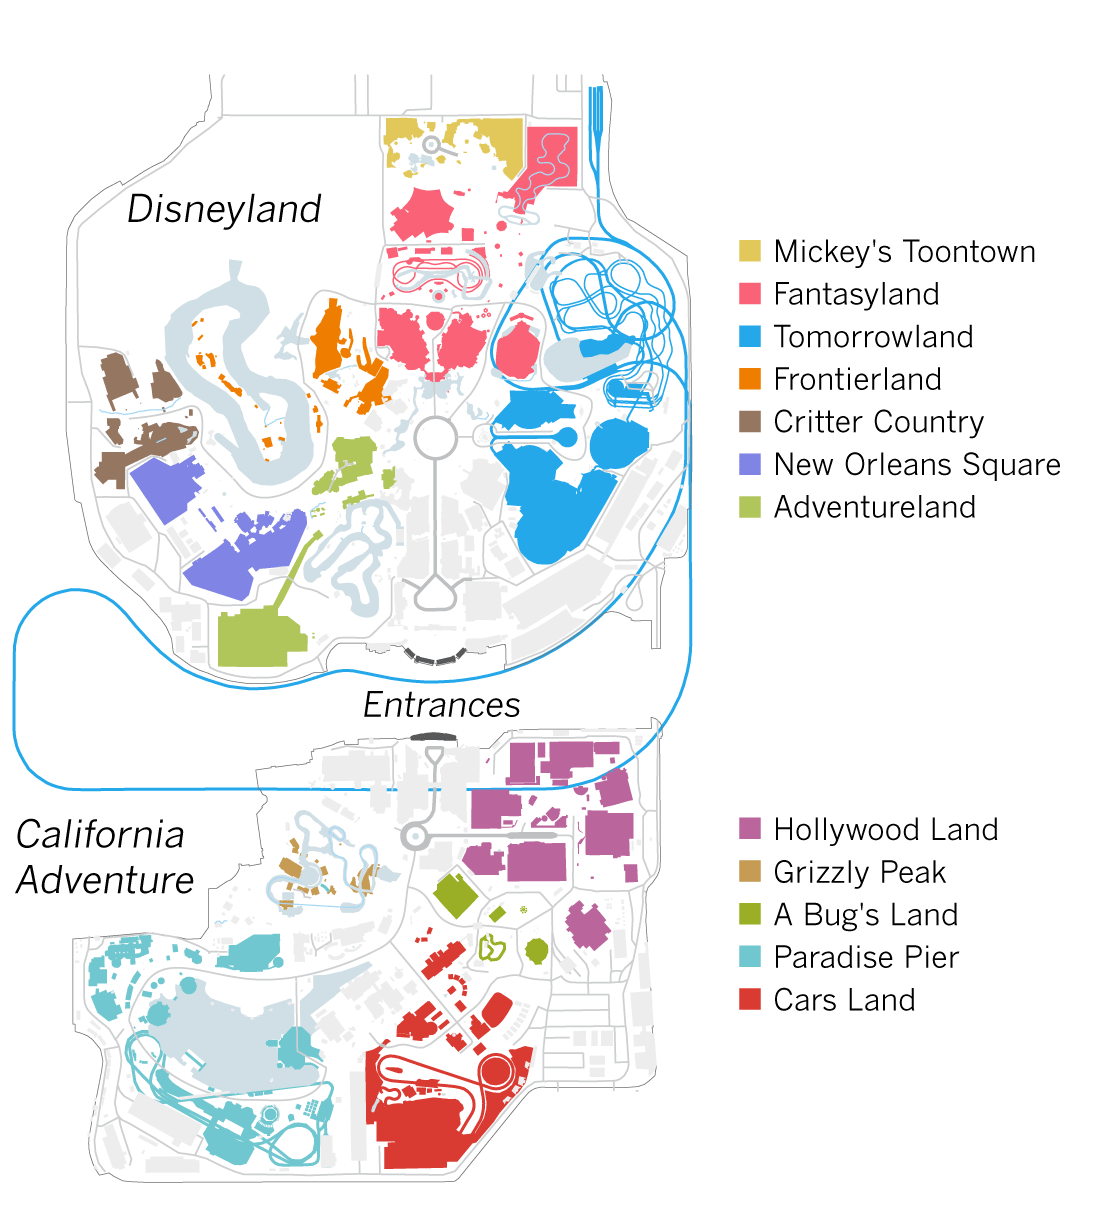 Map of both Disneyland and California Adventure